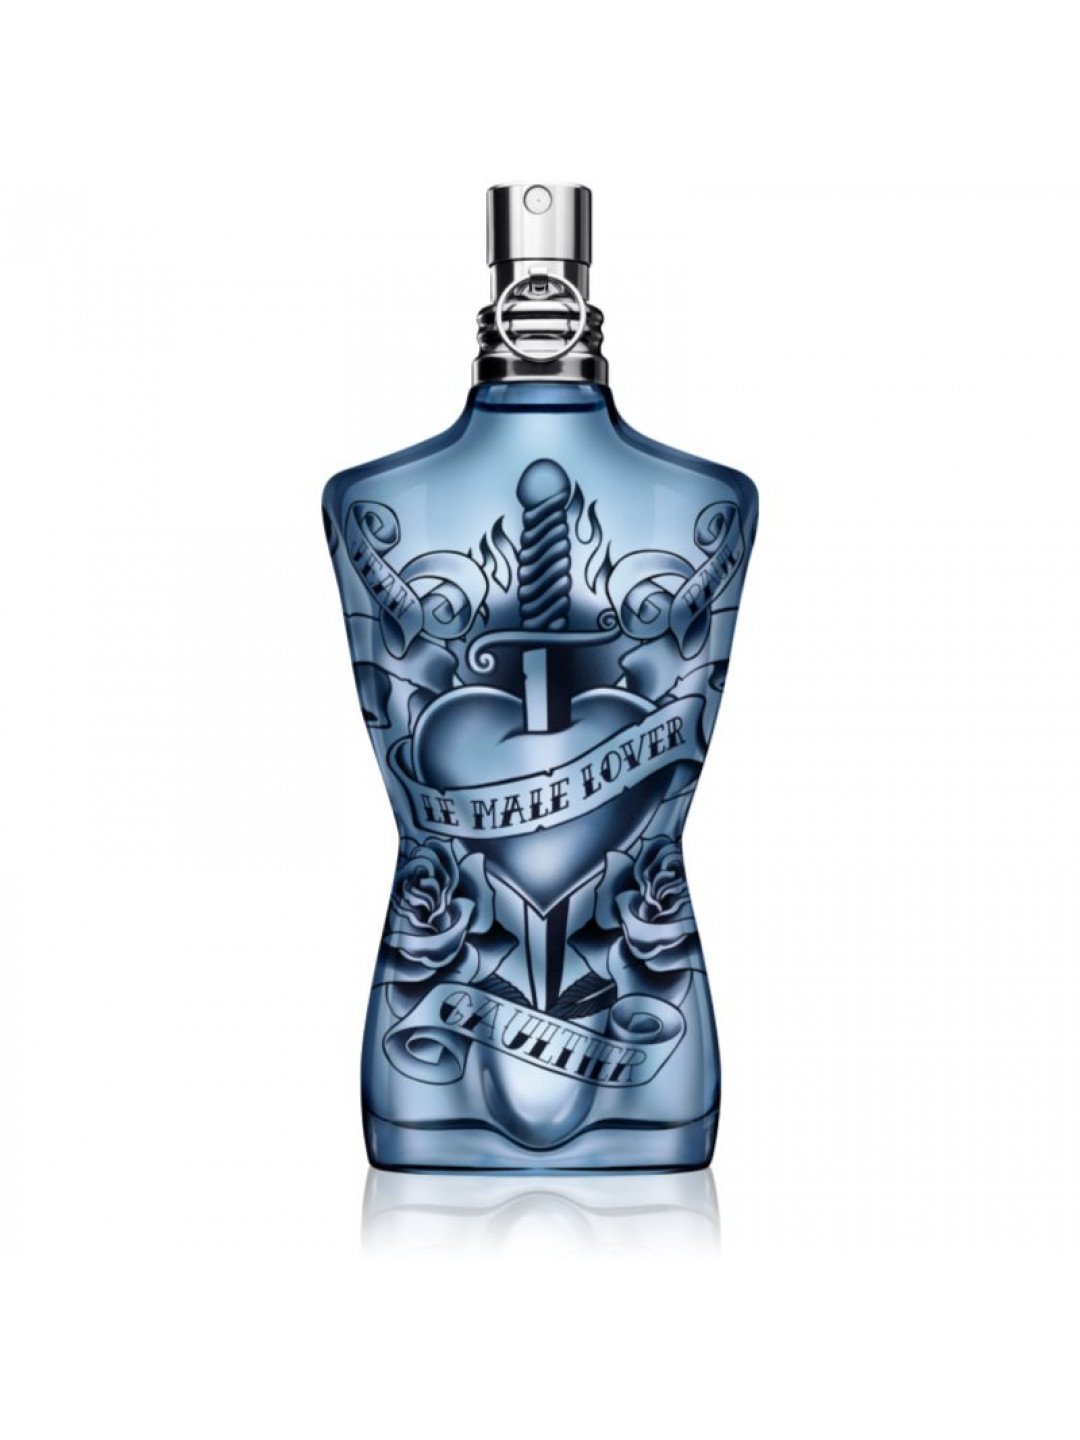 Jean Paul Gaultier Le Male Lover parfémovaná voda pro muže 125 ml